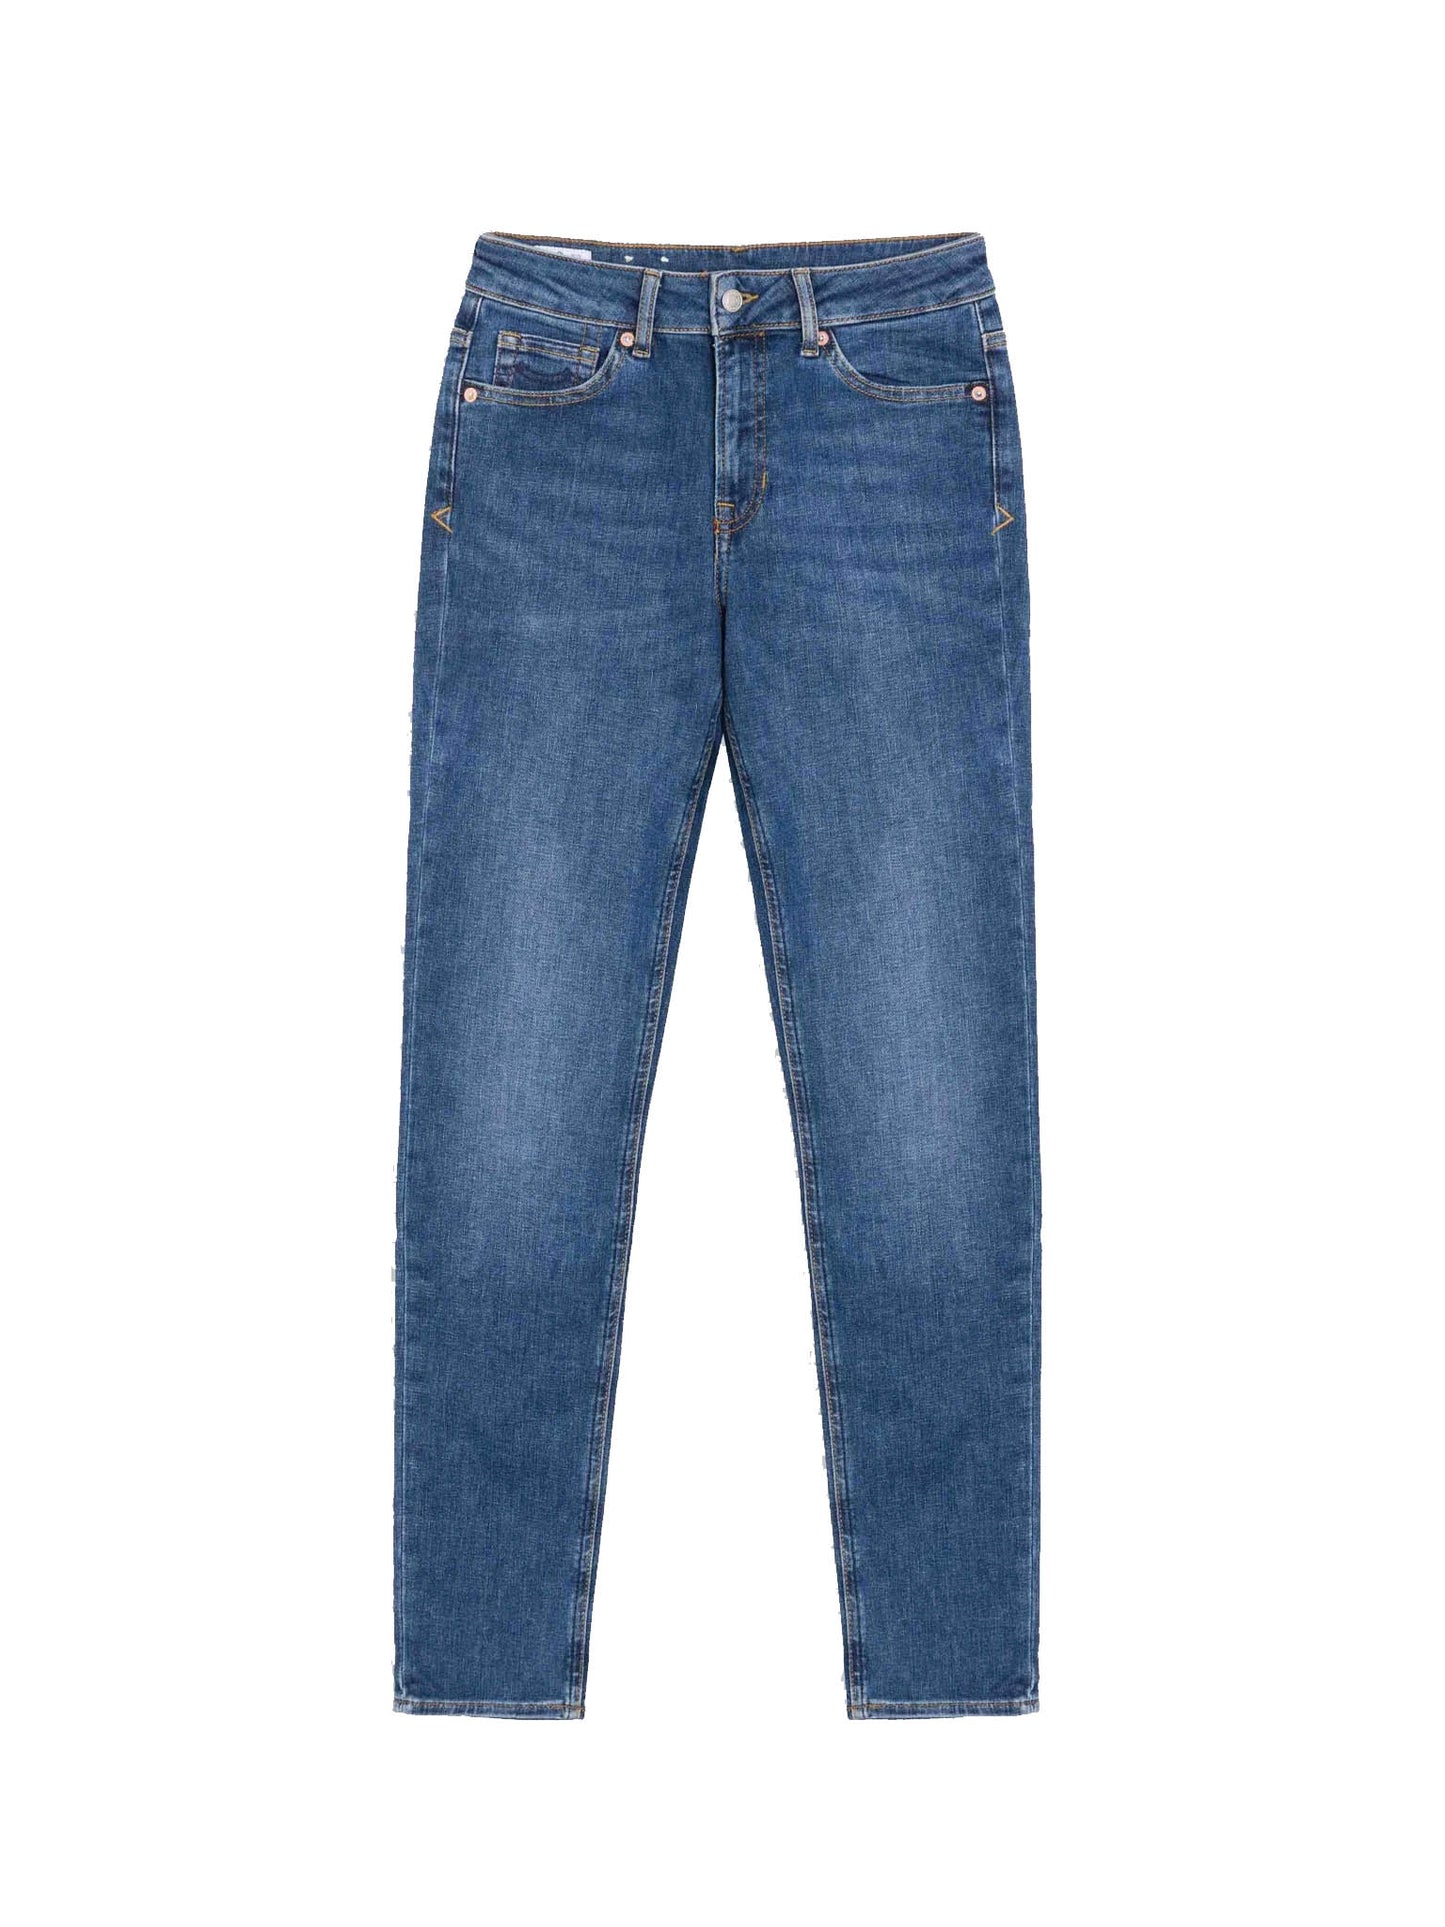 Kings of Indigo Juno Medium Rise Jeans Front Cutout